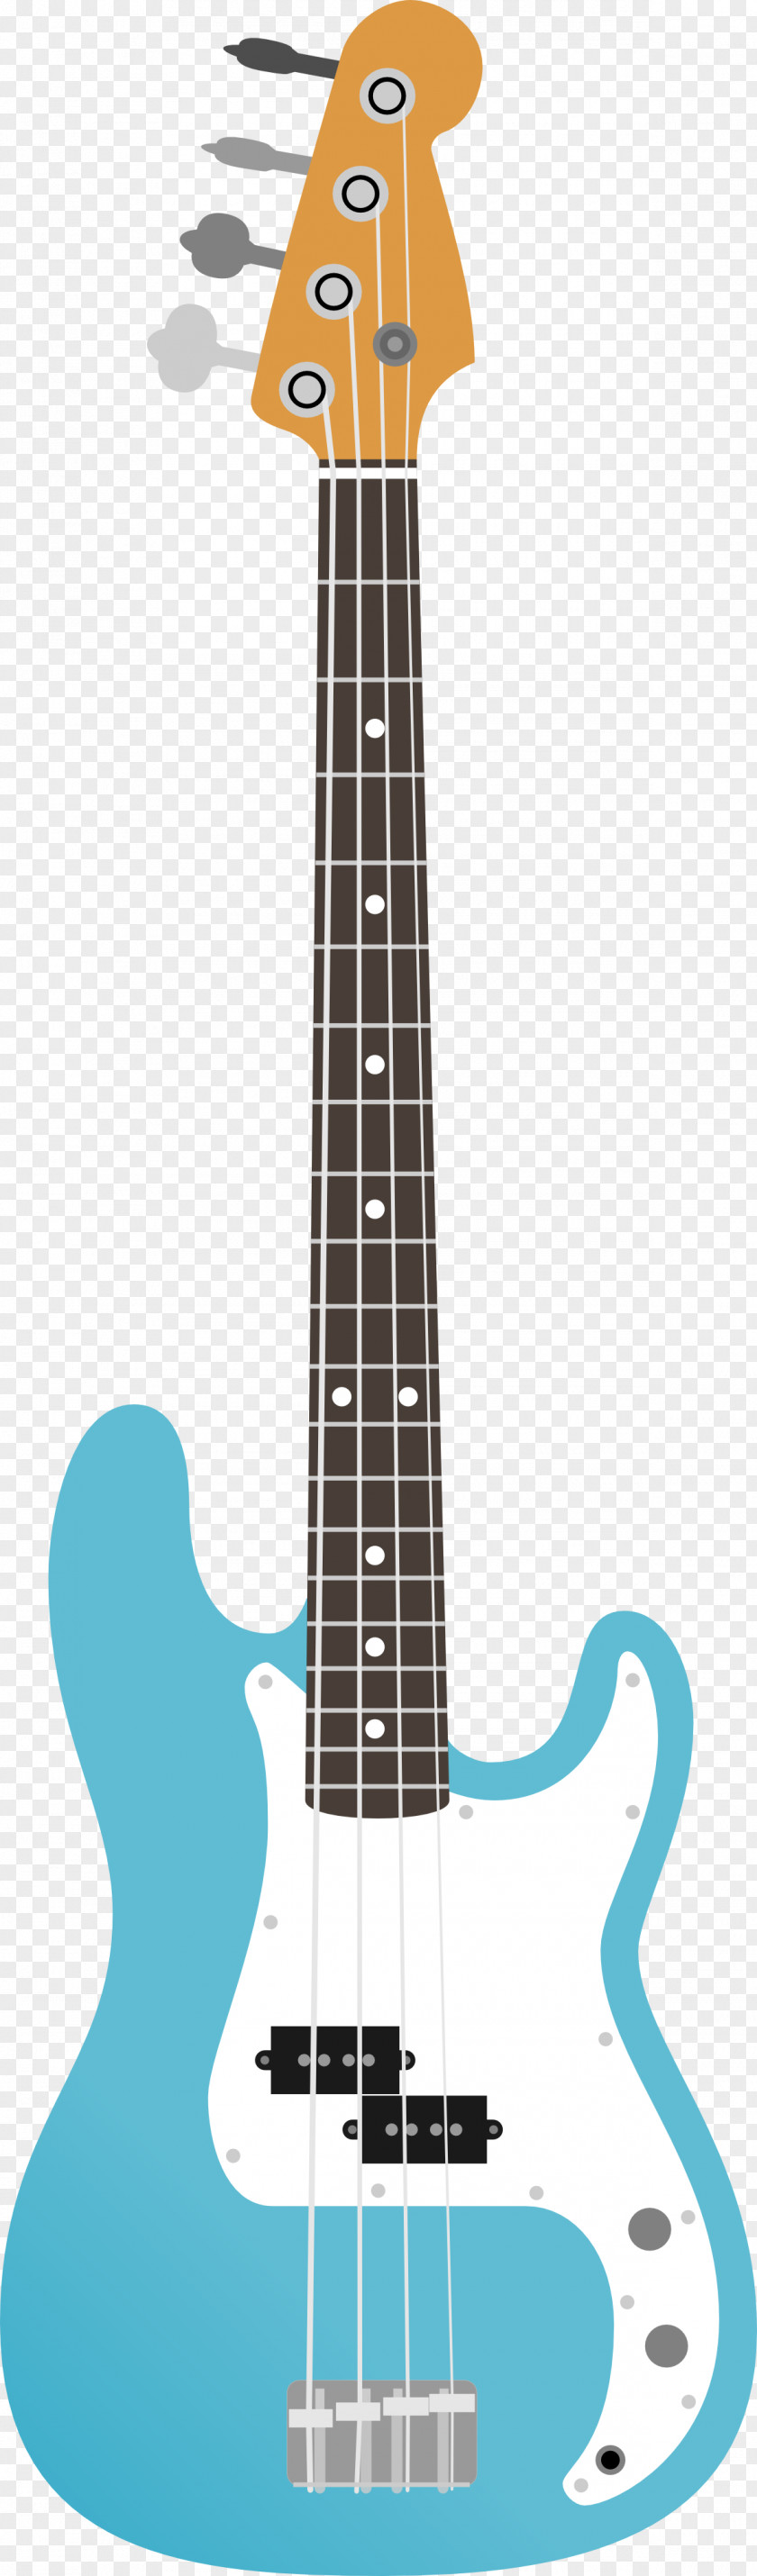 Cartoon Guitar Fender Precision Bass Jaguar PNG